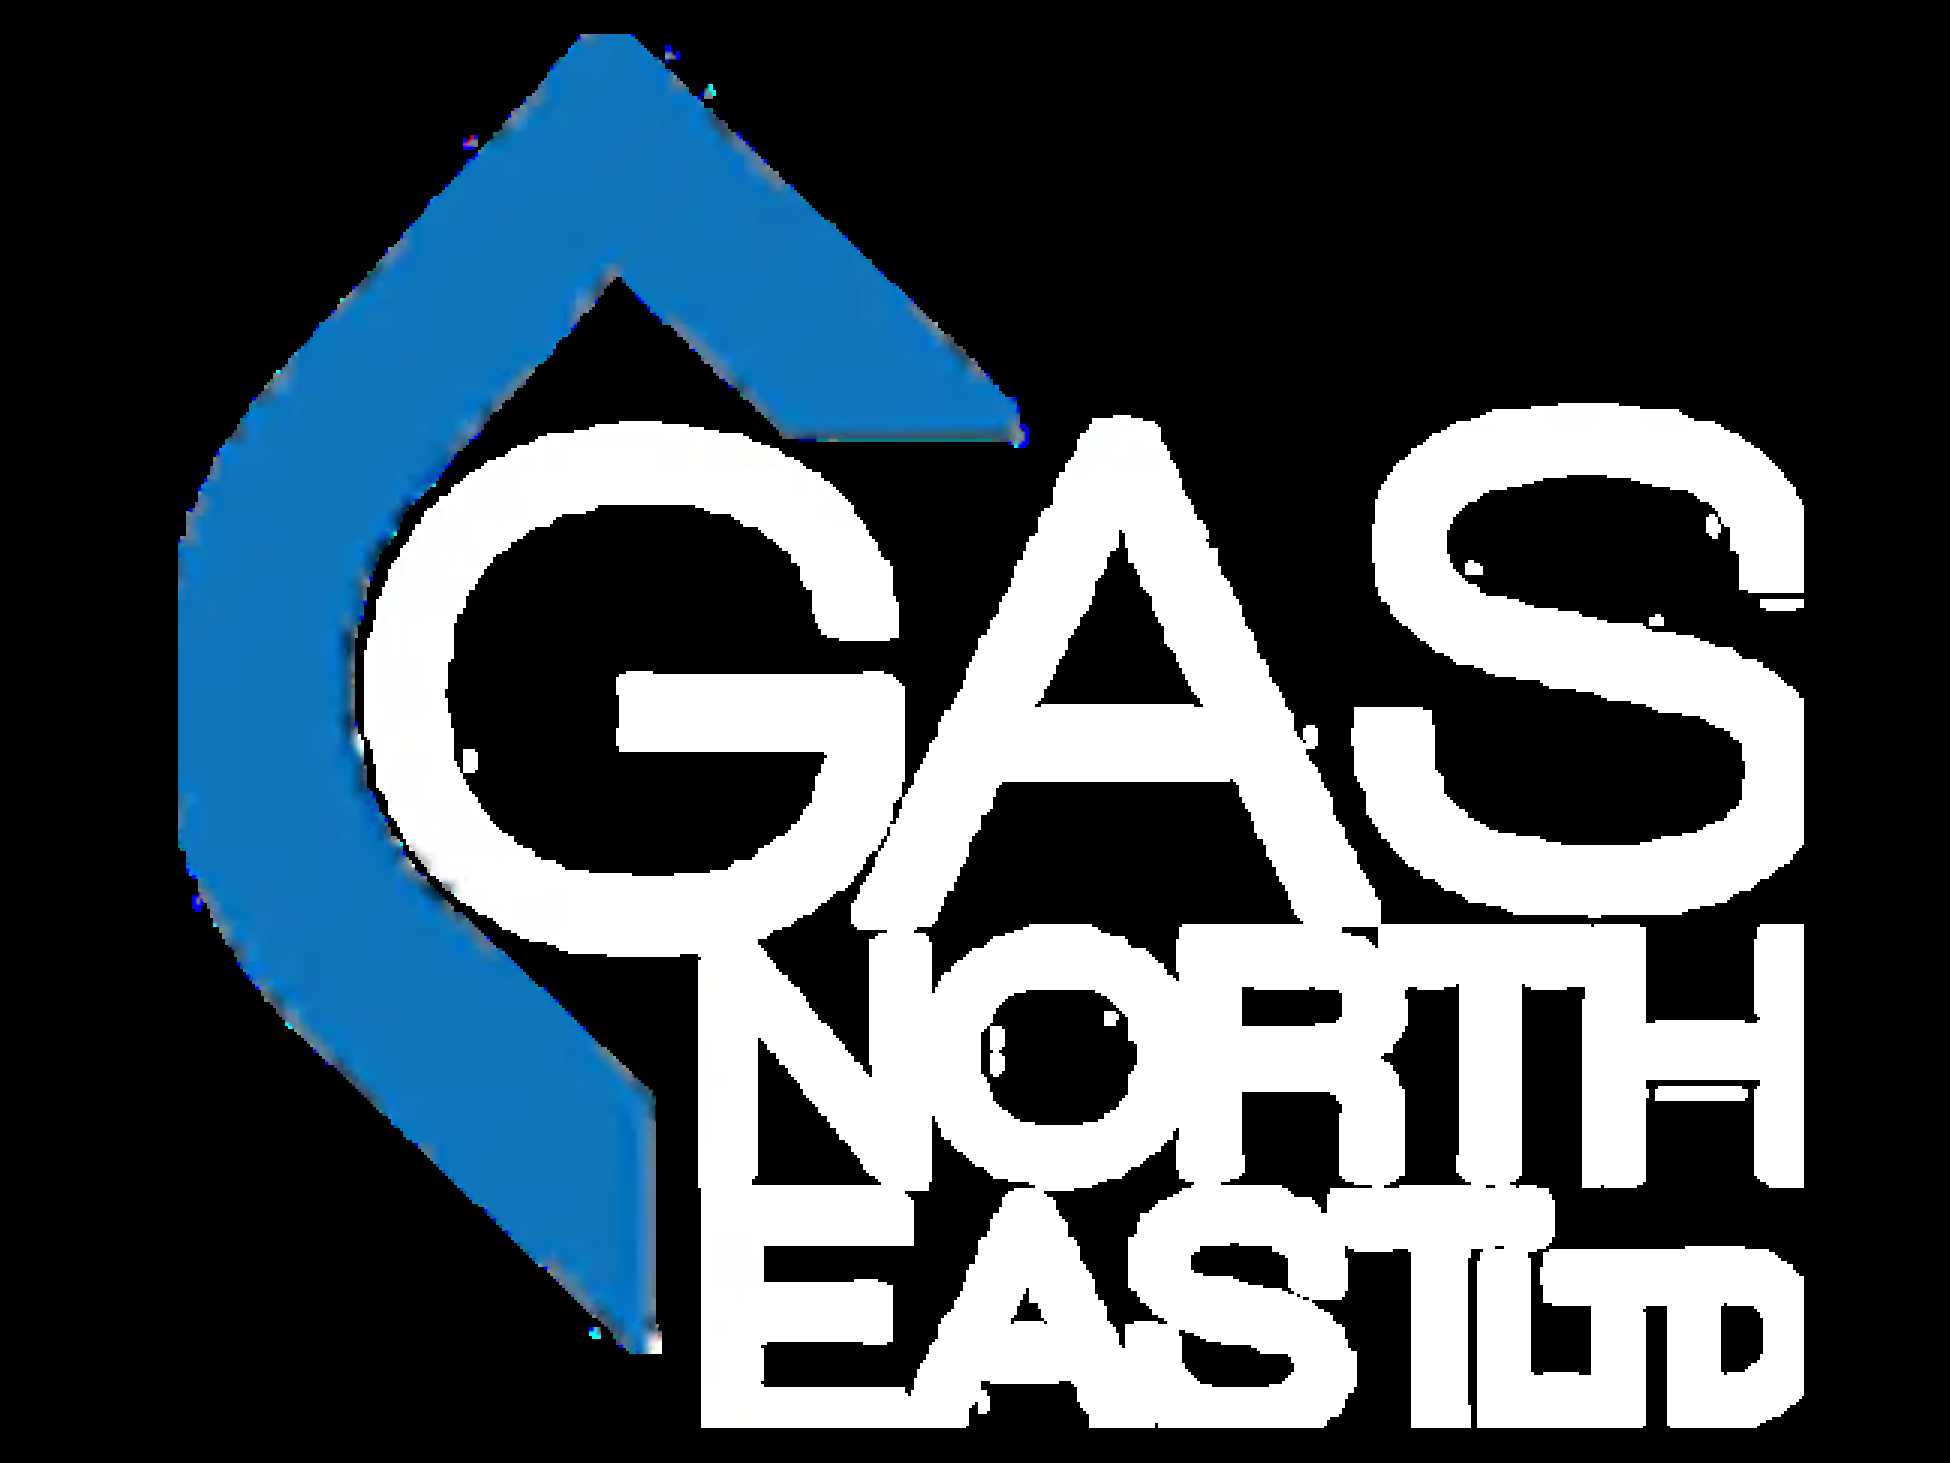 Gas North East Ltd